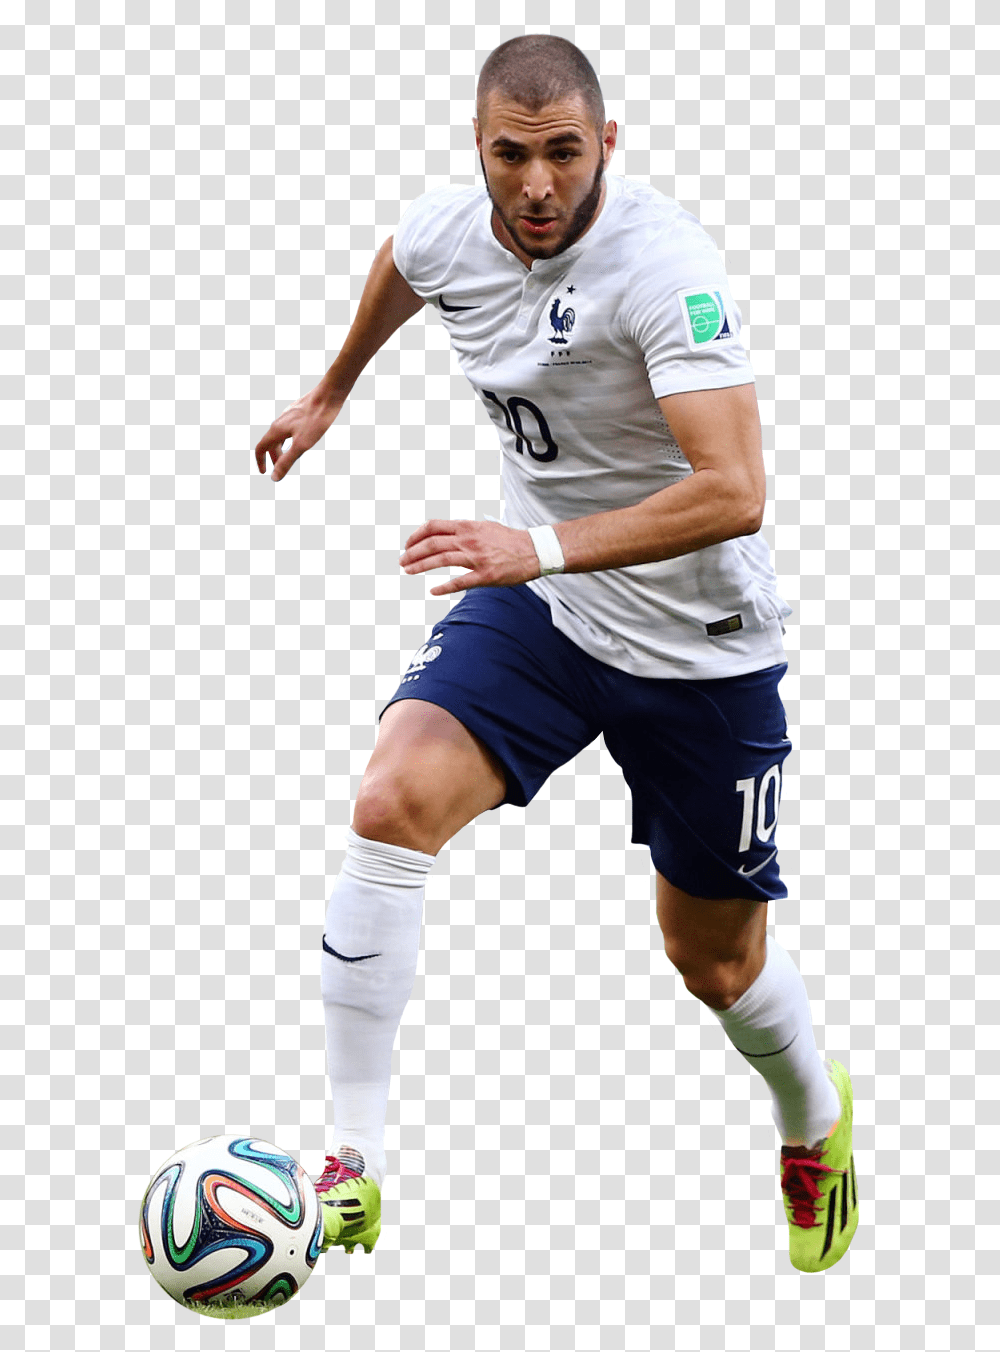 Karim Benzemarender Kick Up A Soccer Ball, Football, Team Sport, Person, People Transparent Png